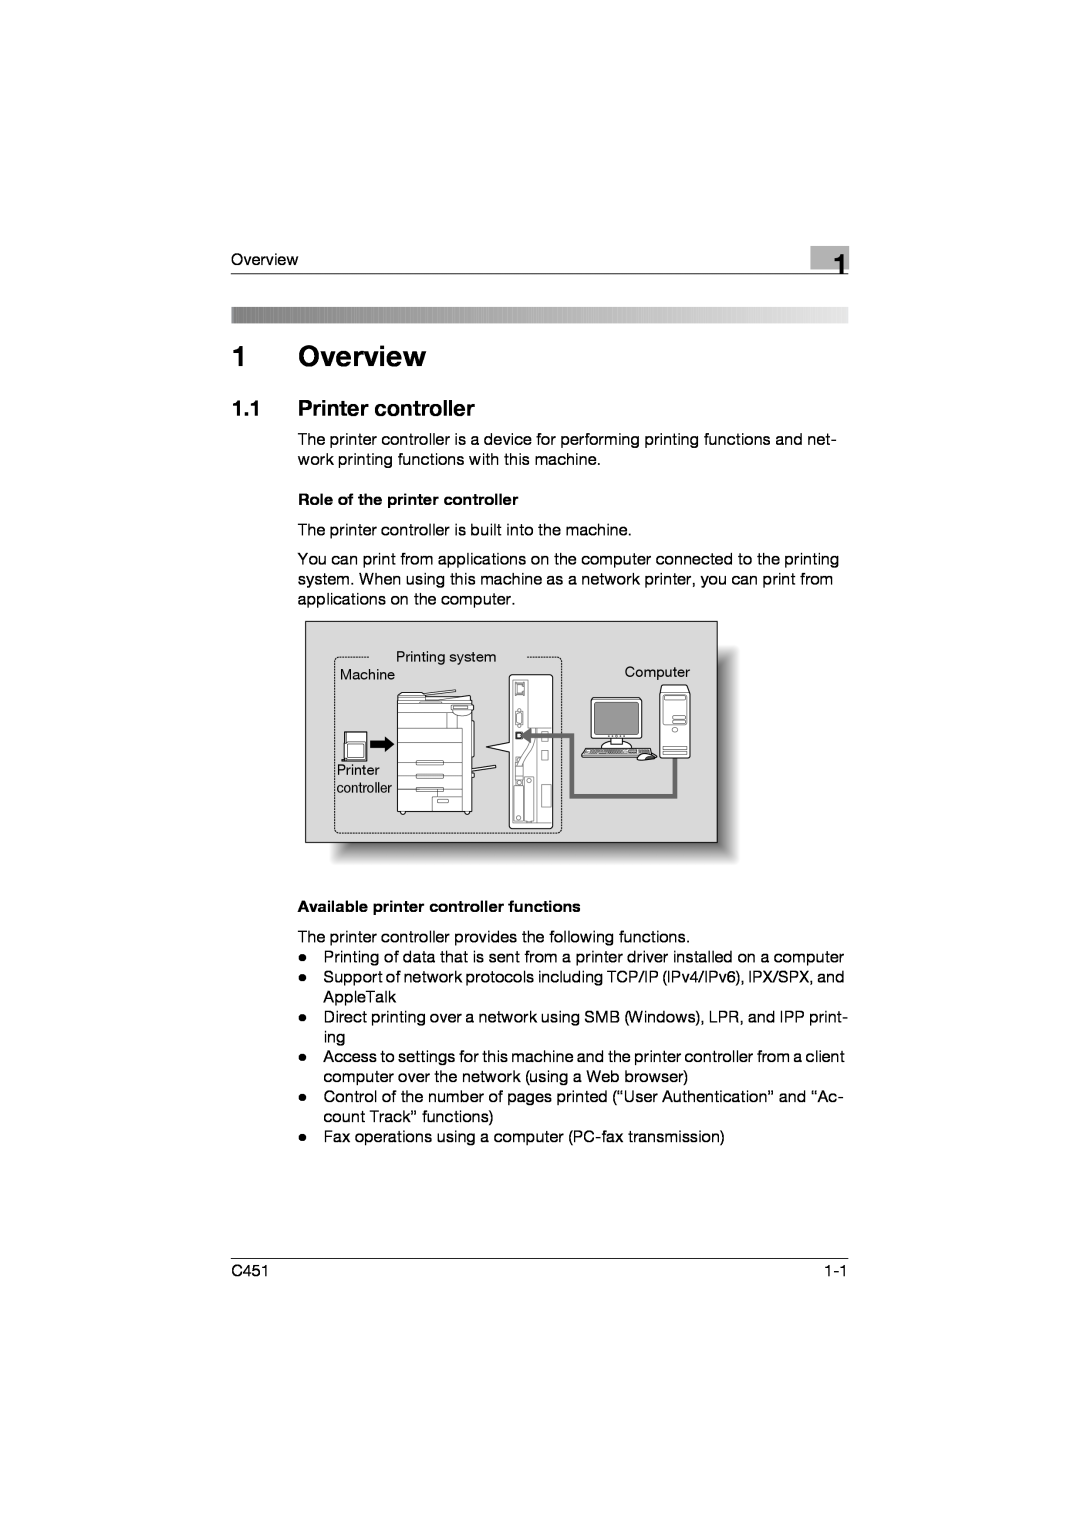 Konica Minolta C451 manual 1Overview, 1.1Printer controller 